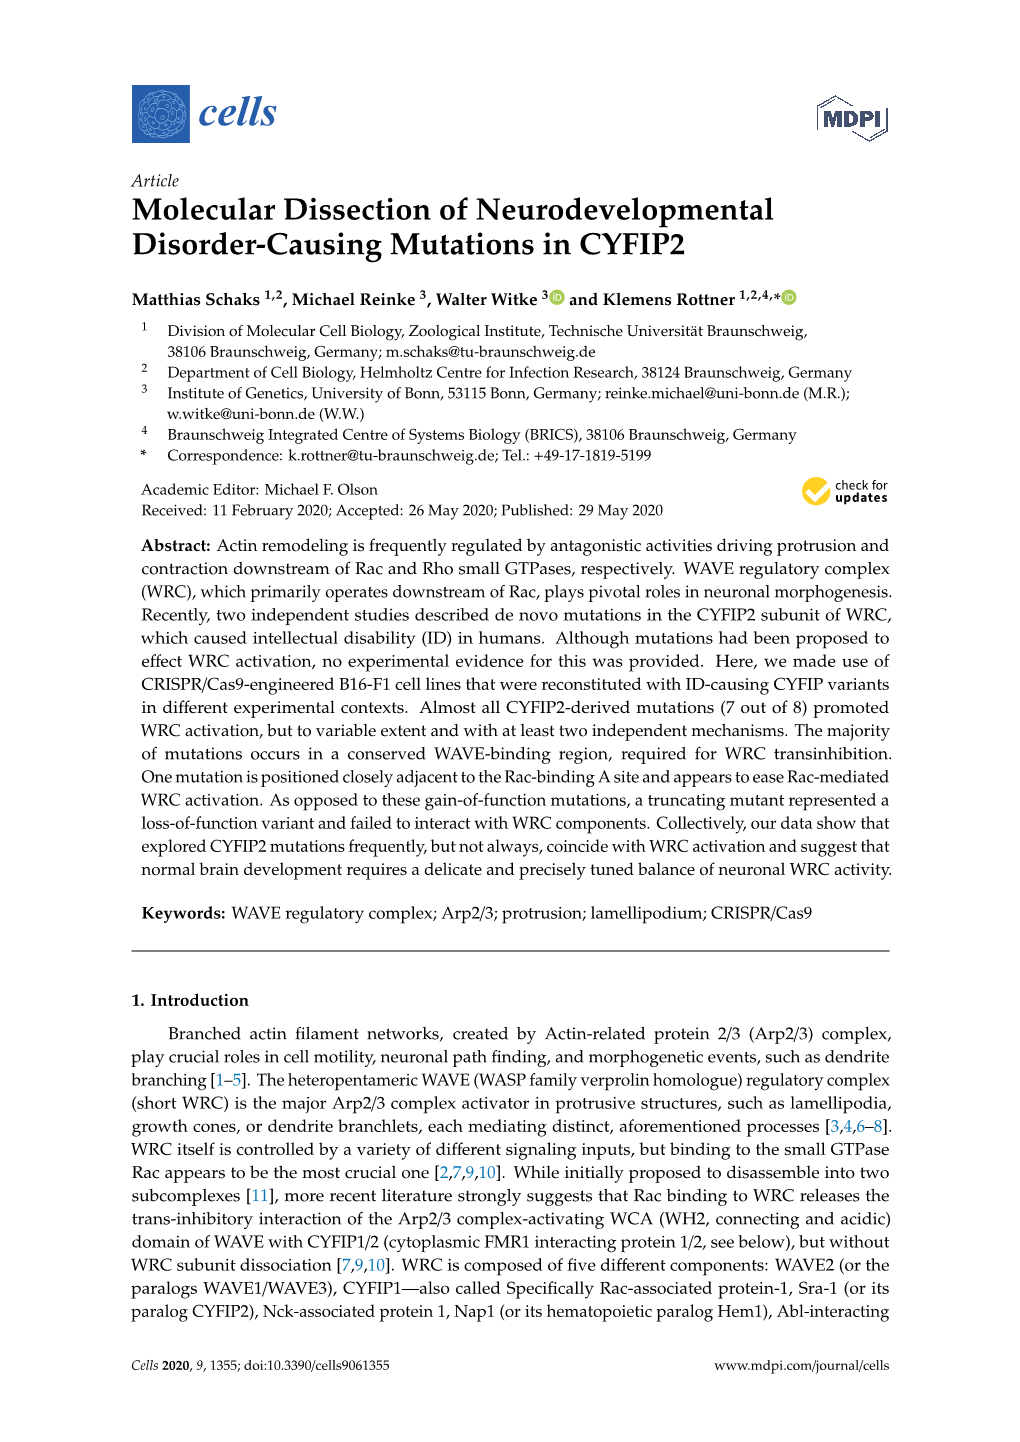 Molecular Dissection of Neurodevelopmental Disorder-Causing Mutations in CYFIP2